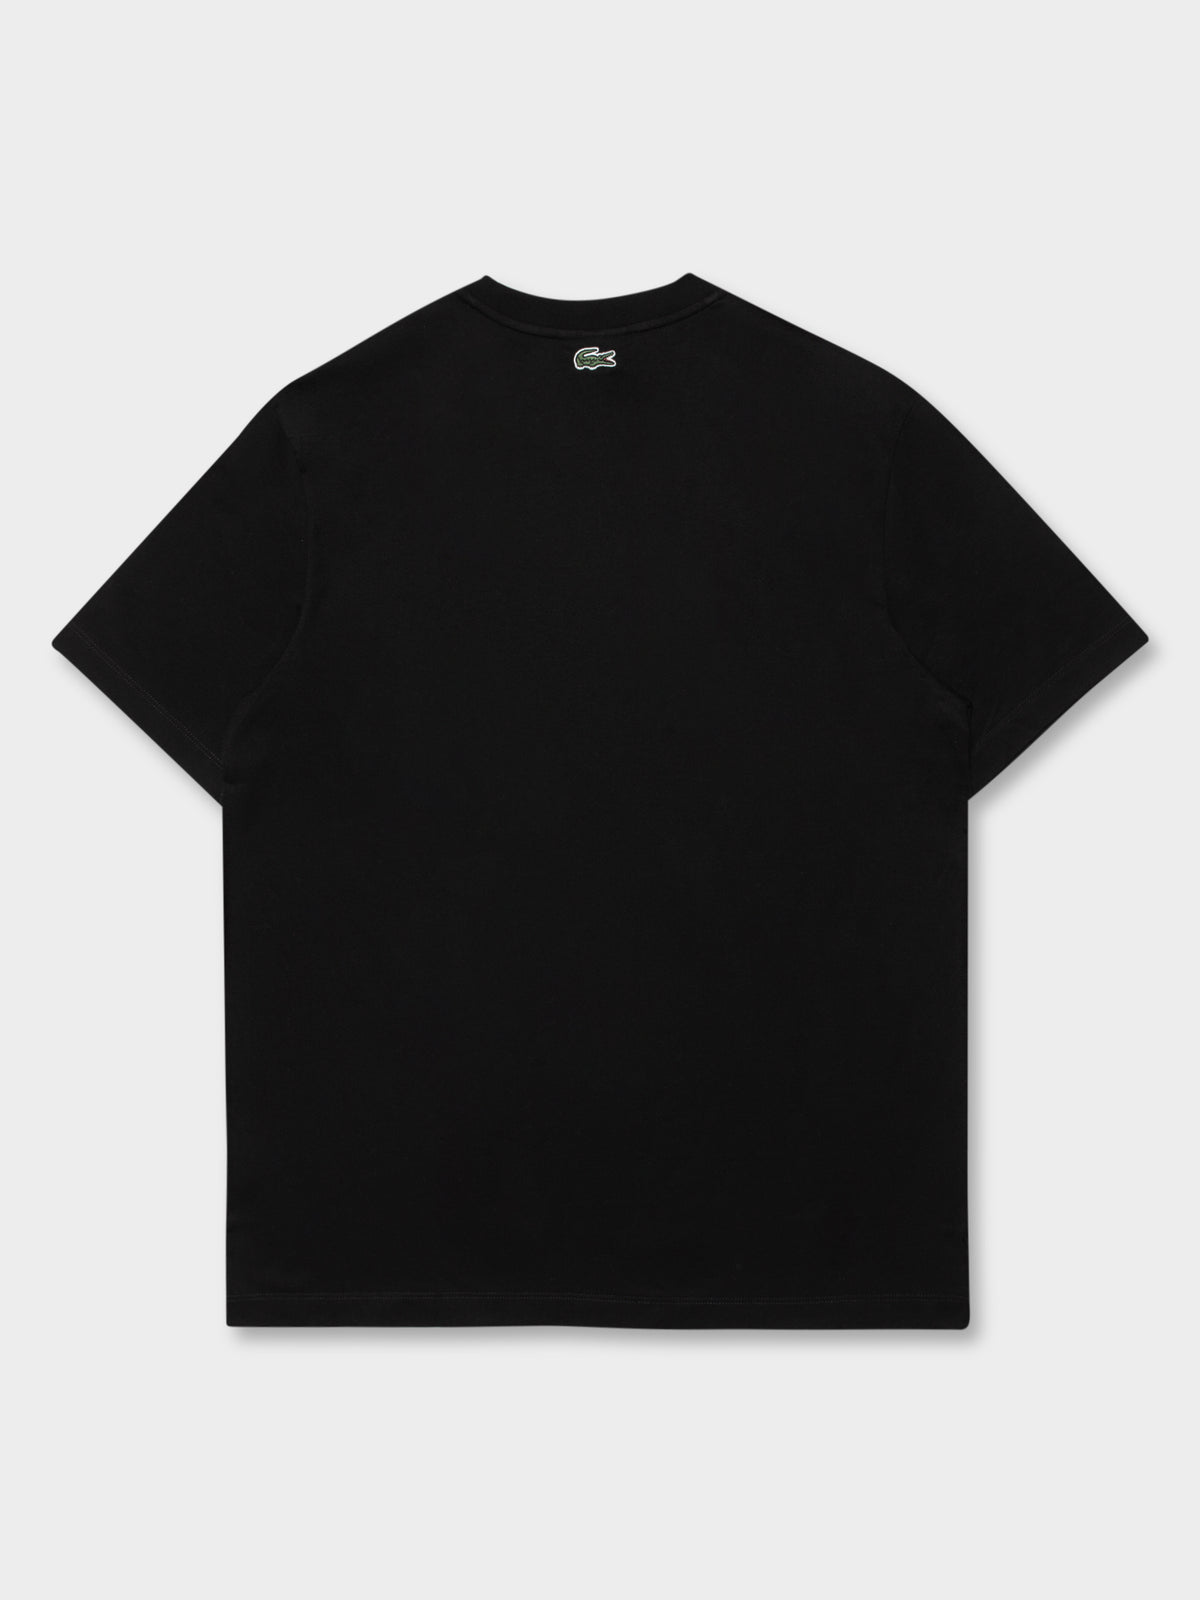 Croc Wording T-Shirt in Black